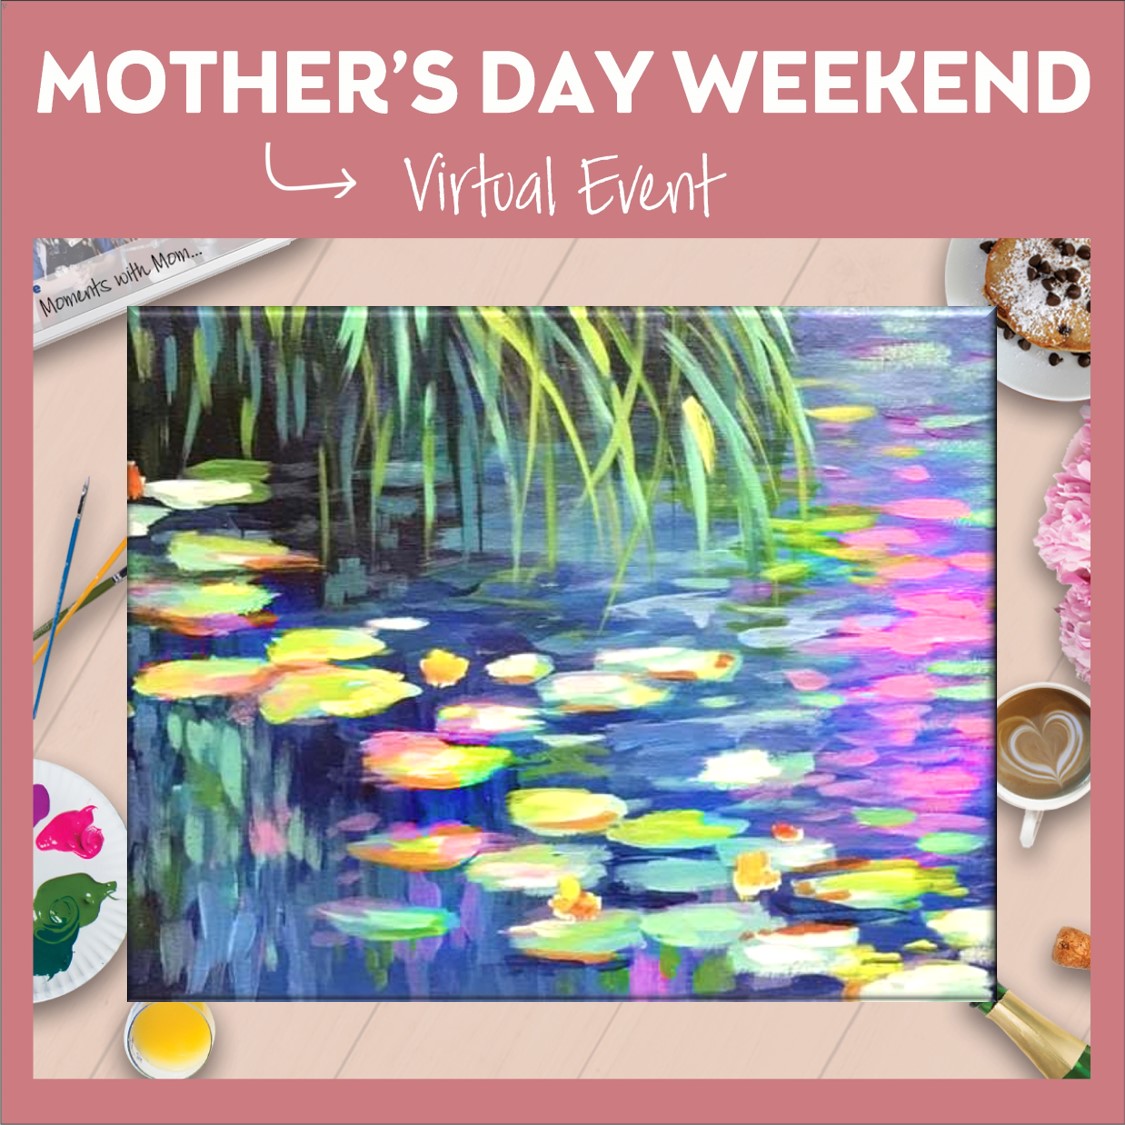 Monet’s Water Lilies